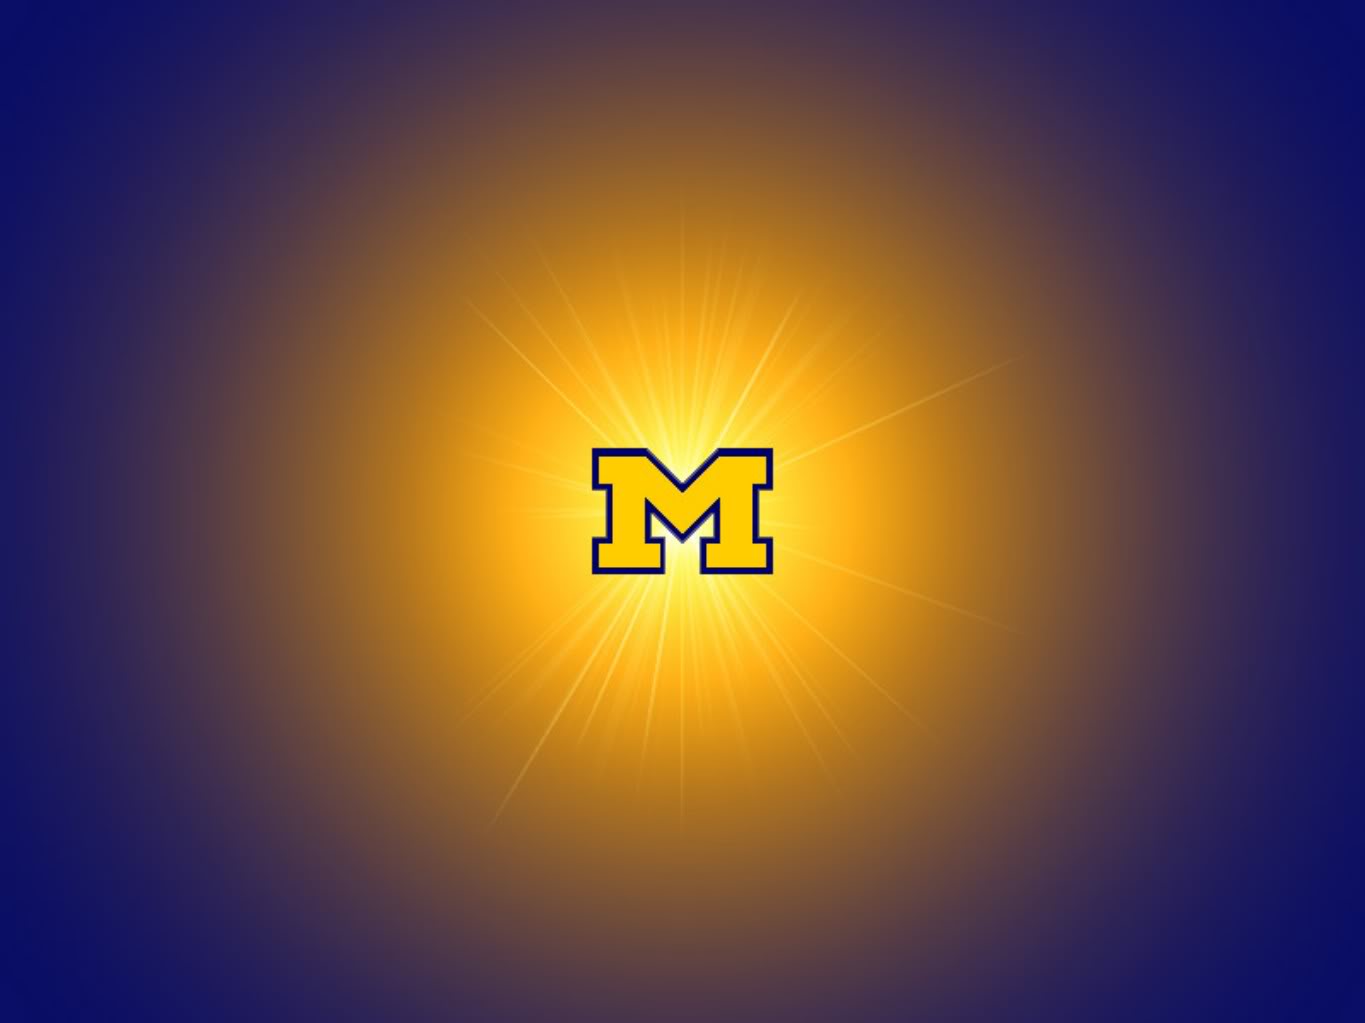  Background   Michigan Glowing M 1 Megabyte Wallpaper for Desktop 1365x1023